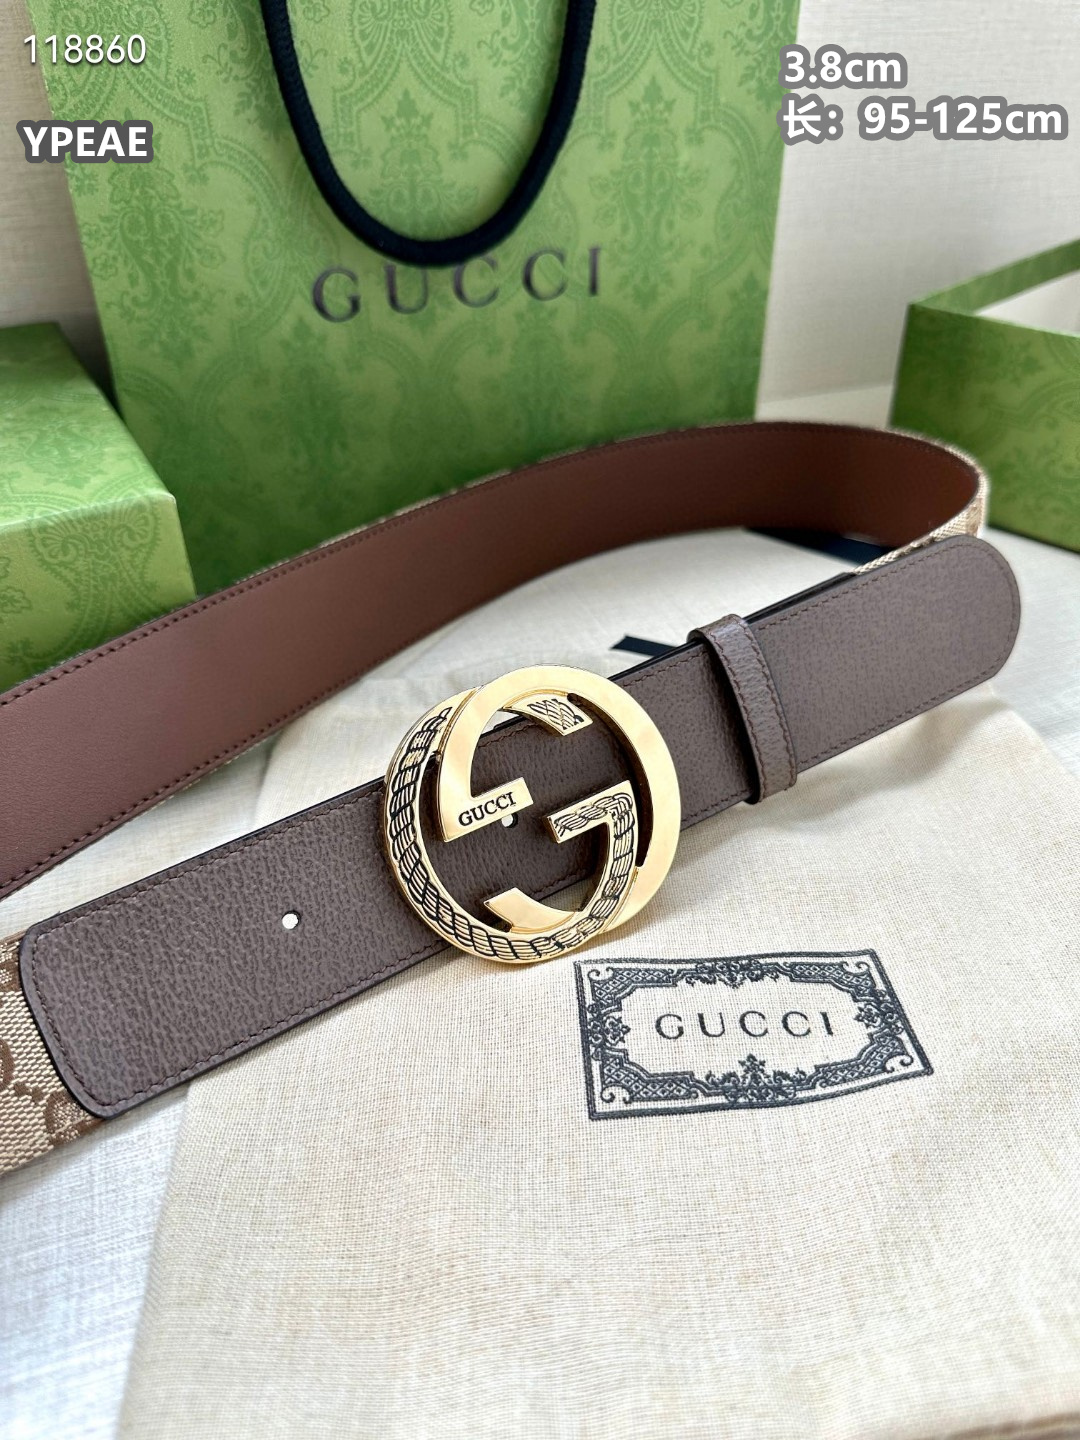 Gucci 3.8cm Width Belts For Men # 263934, cheap Gucci Belts, only $56!